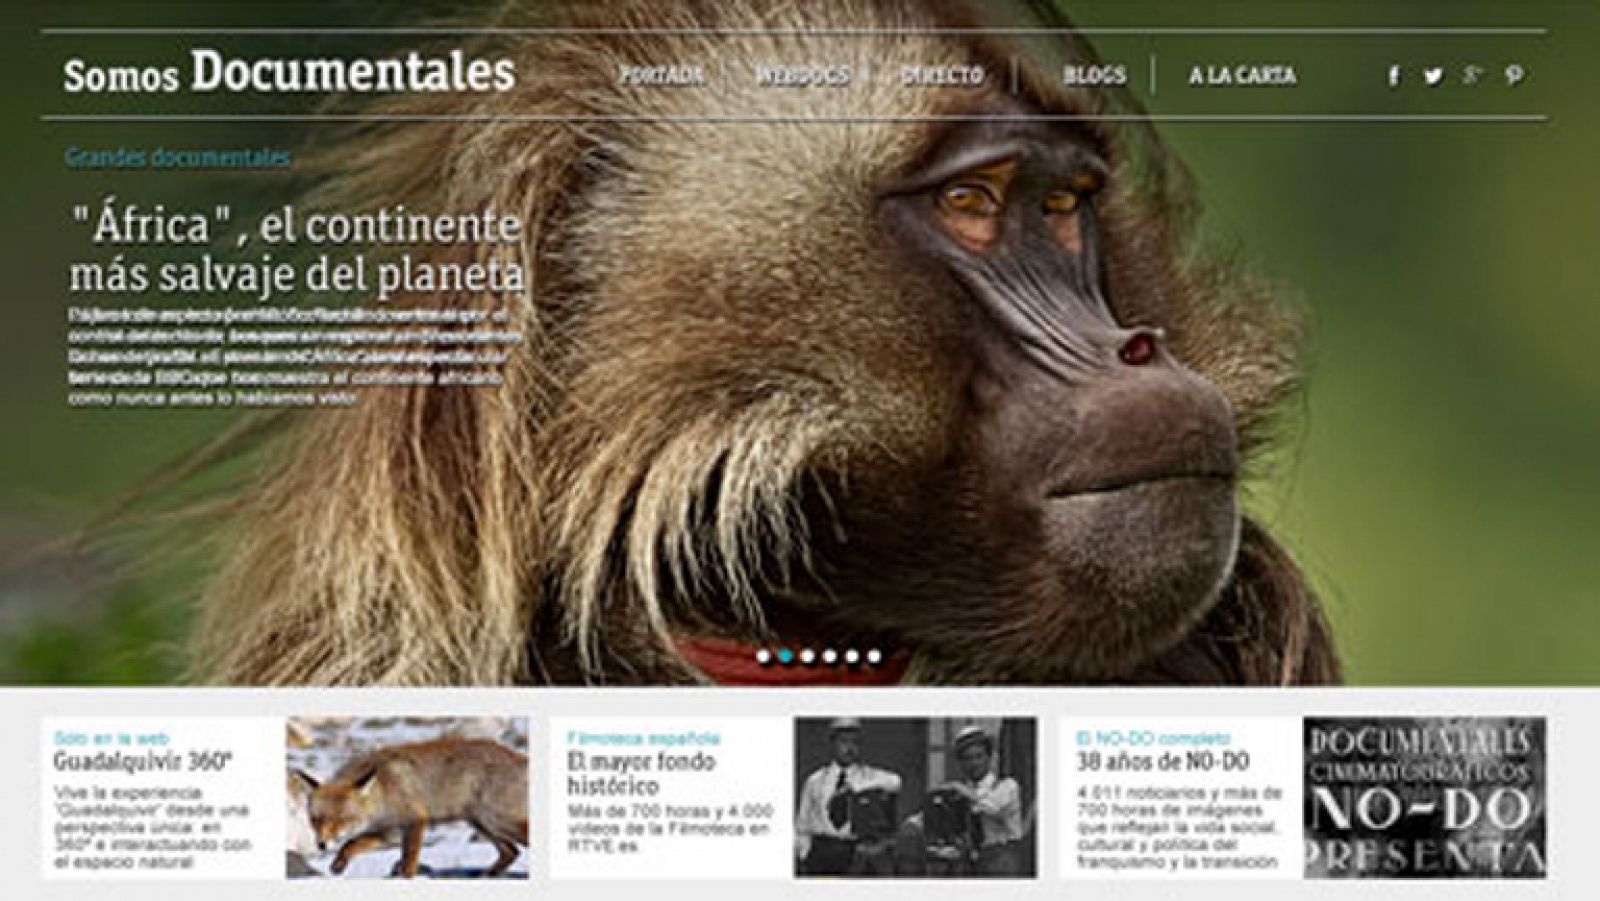 Telediario 1: "Somos documentales", web RTVE.es | RTVE Play